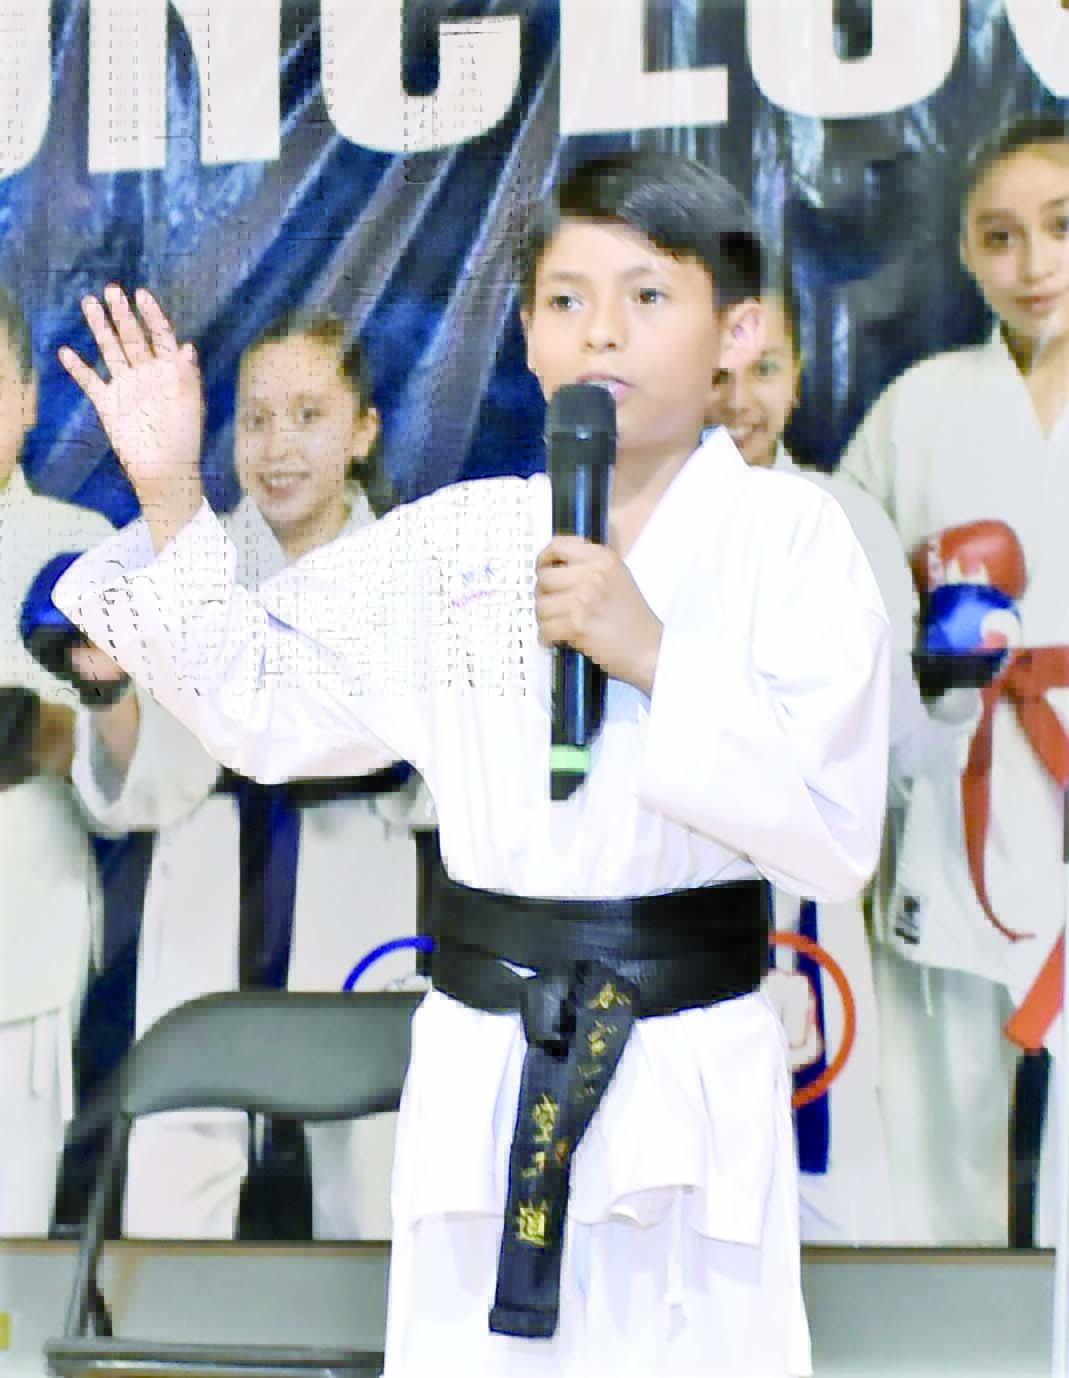 Éxito Torneo de Karate, realizan XXII Copa Monclova 2019